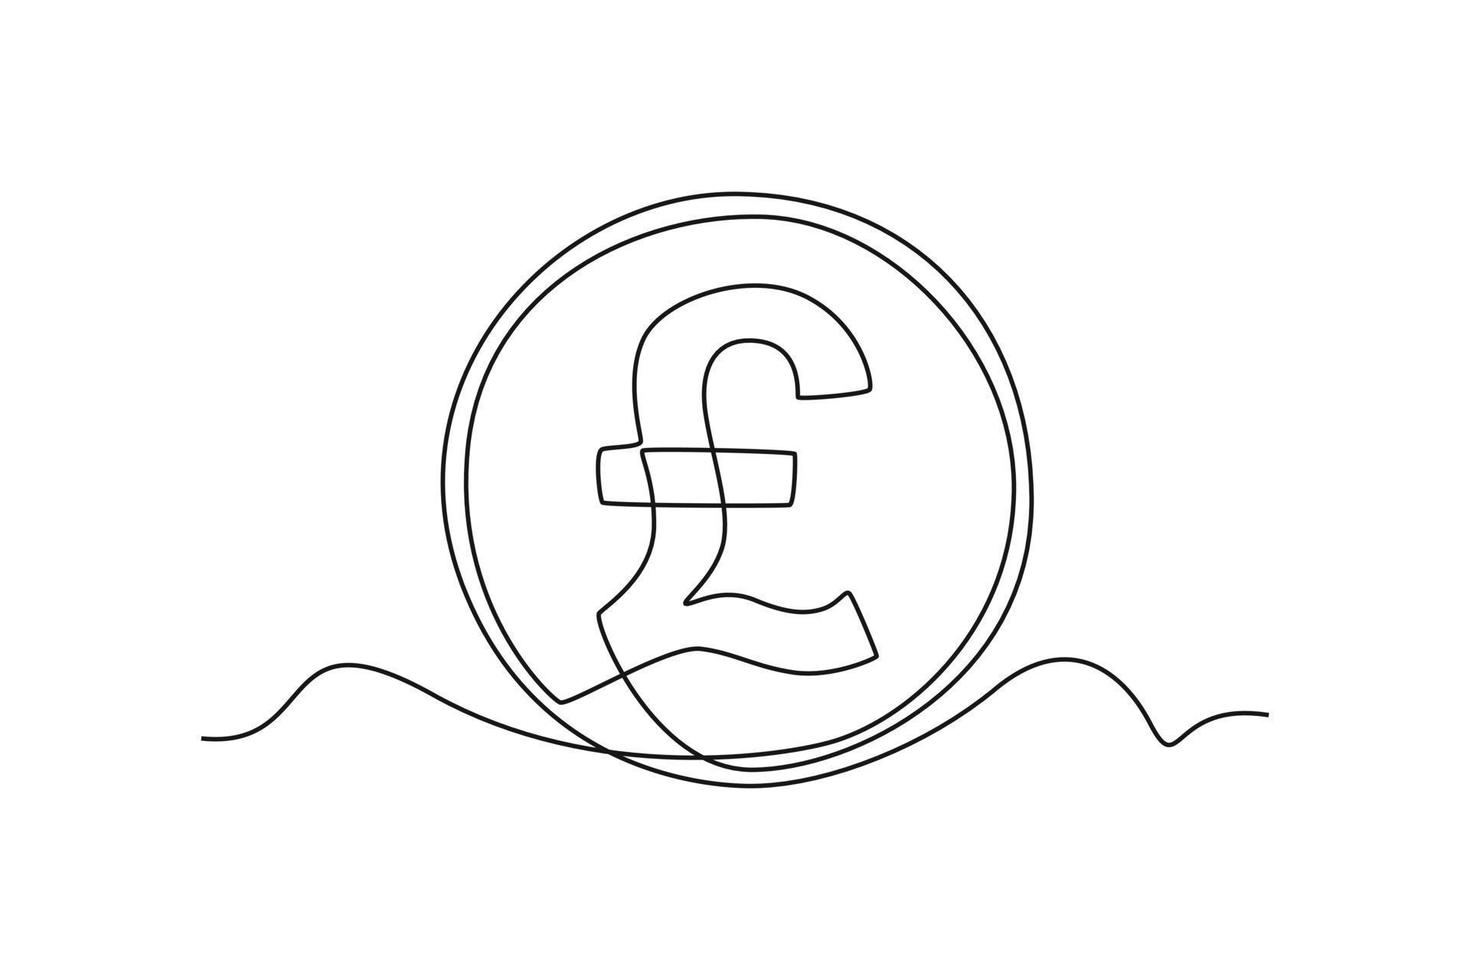 enda en linje teckning pund sterling- mynt valuta från england. Land valuta begrepp kontinuerlig linje dra design grafisk vektor illustration